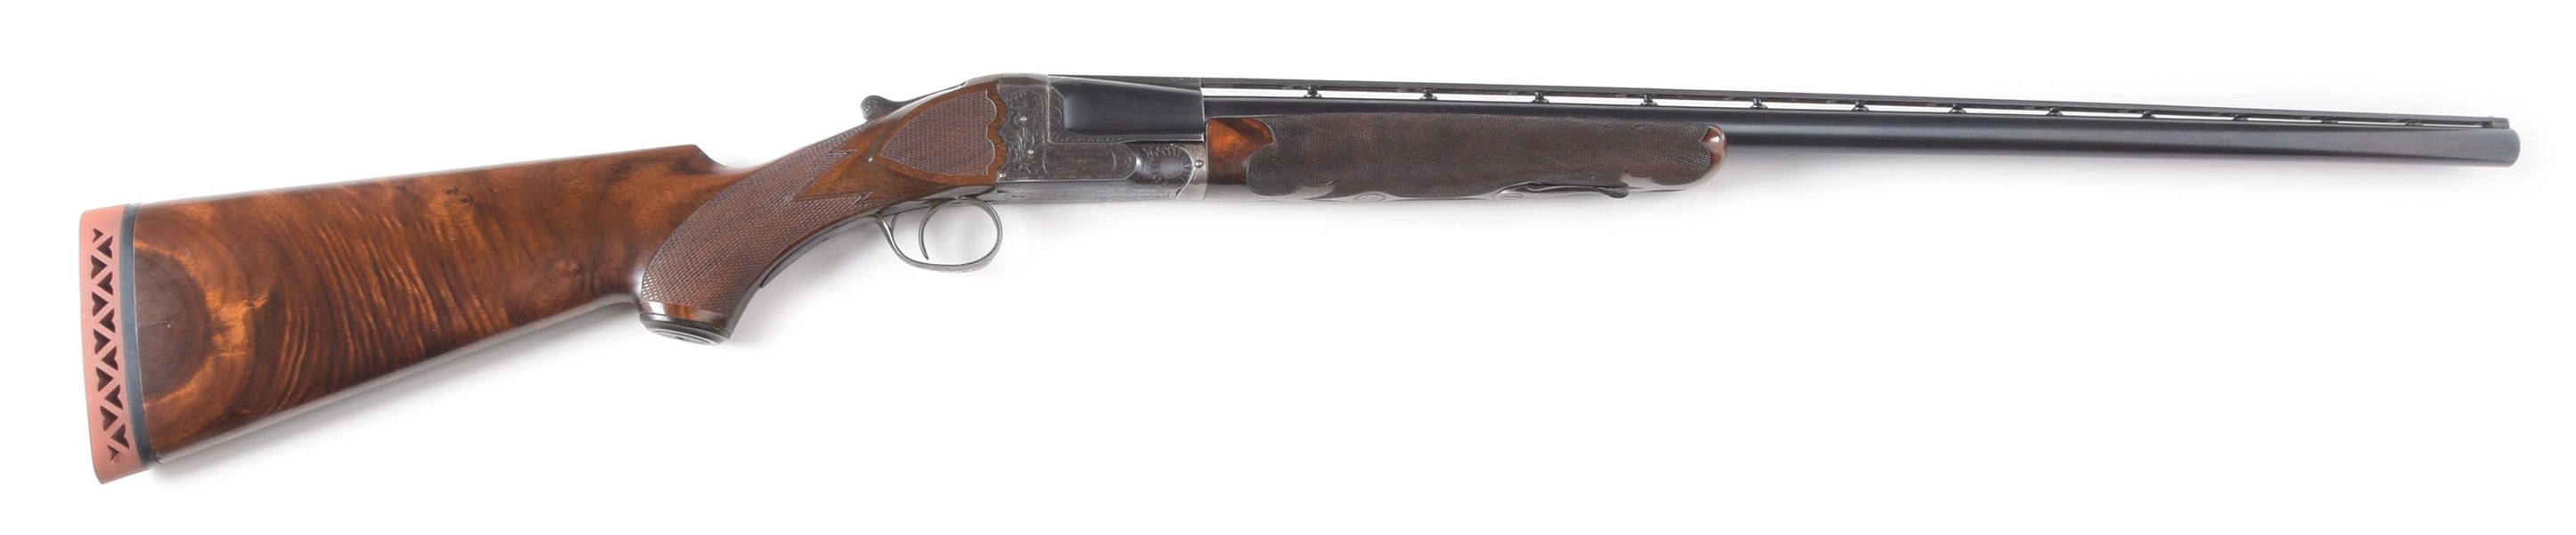 (C) BAKER GUN COMPANY "ELITE" GRADE SINGLE BARREL TRAP SHOTGUN.